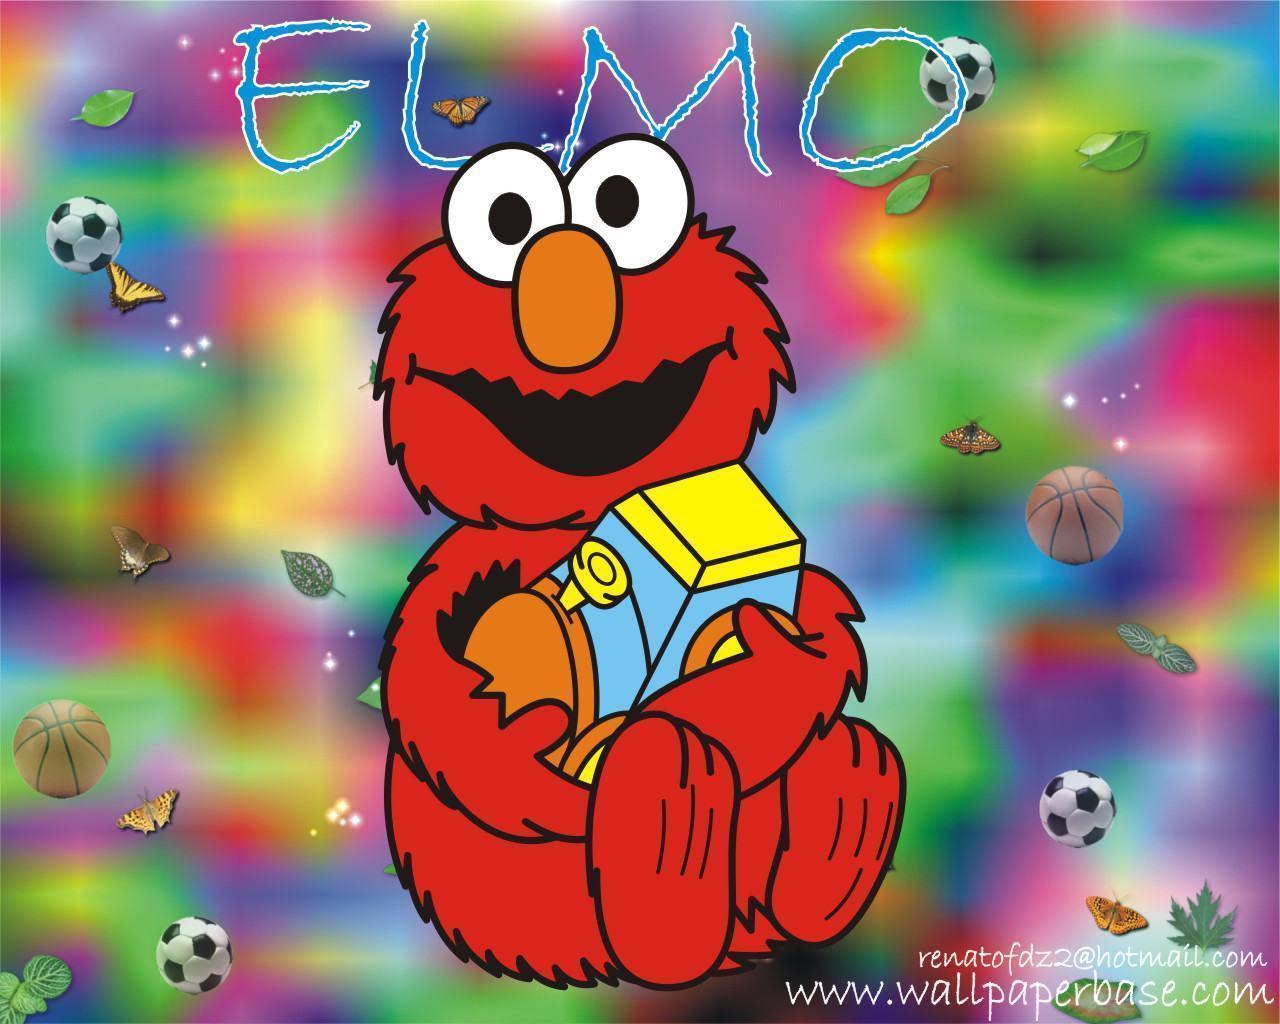 Elmo Wallpaper. Elmo Wallpaper